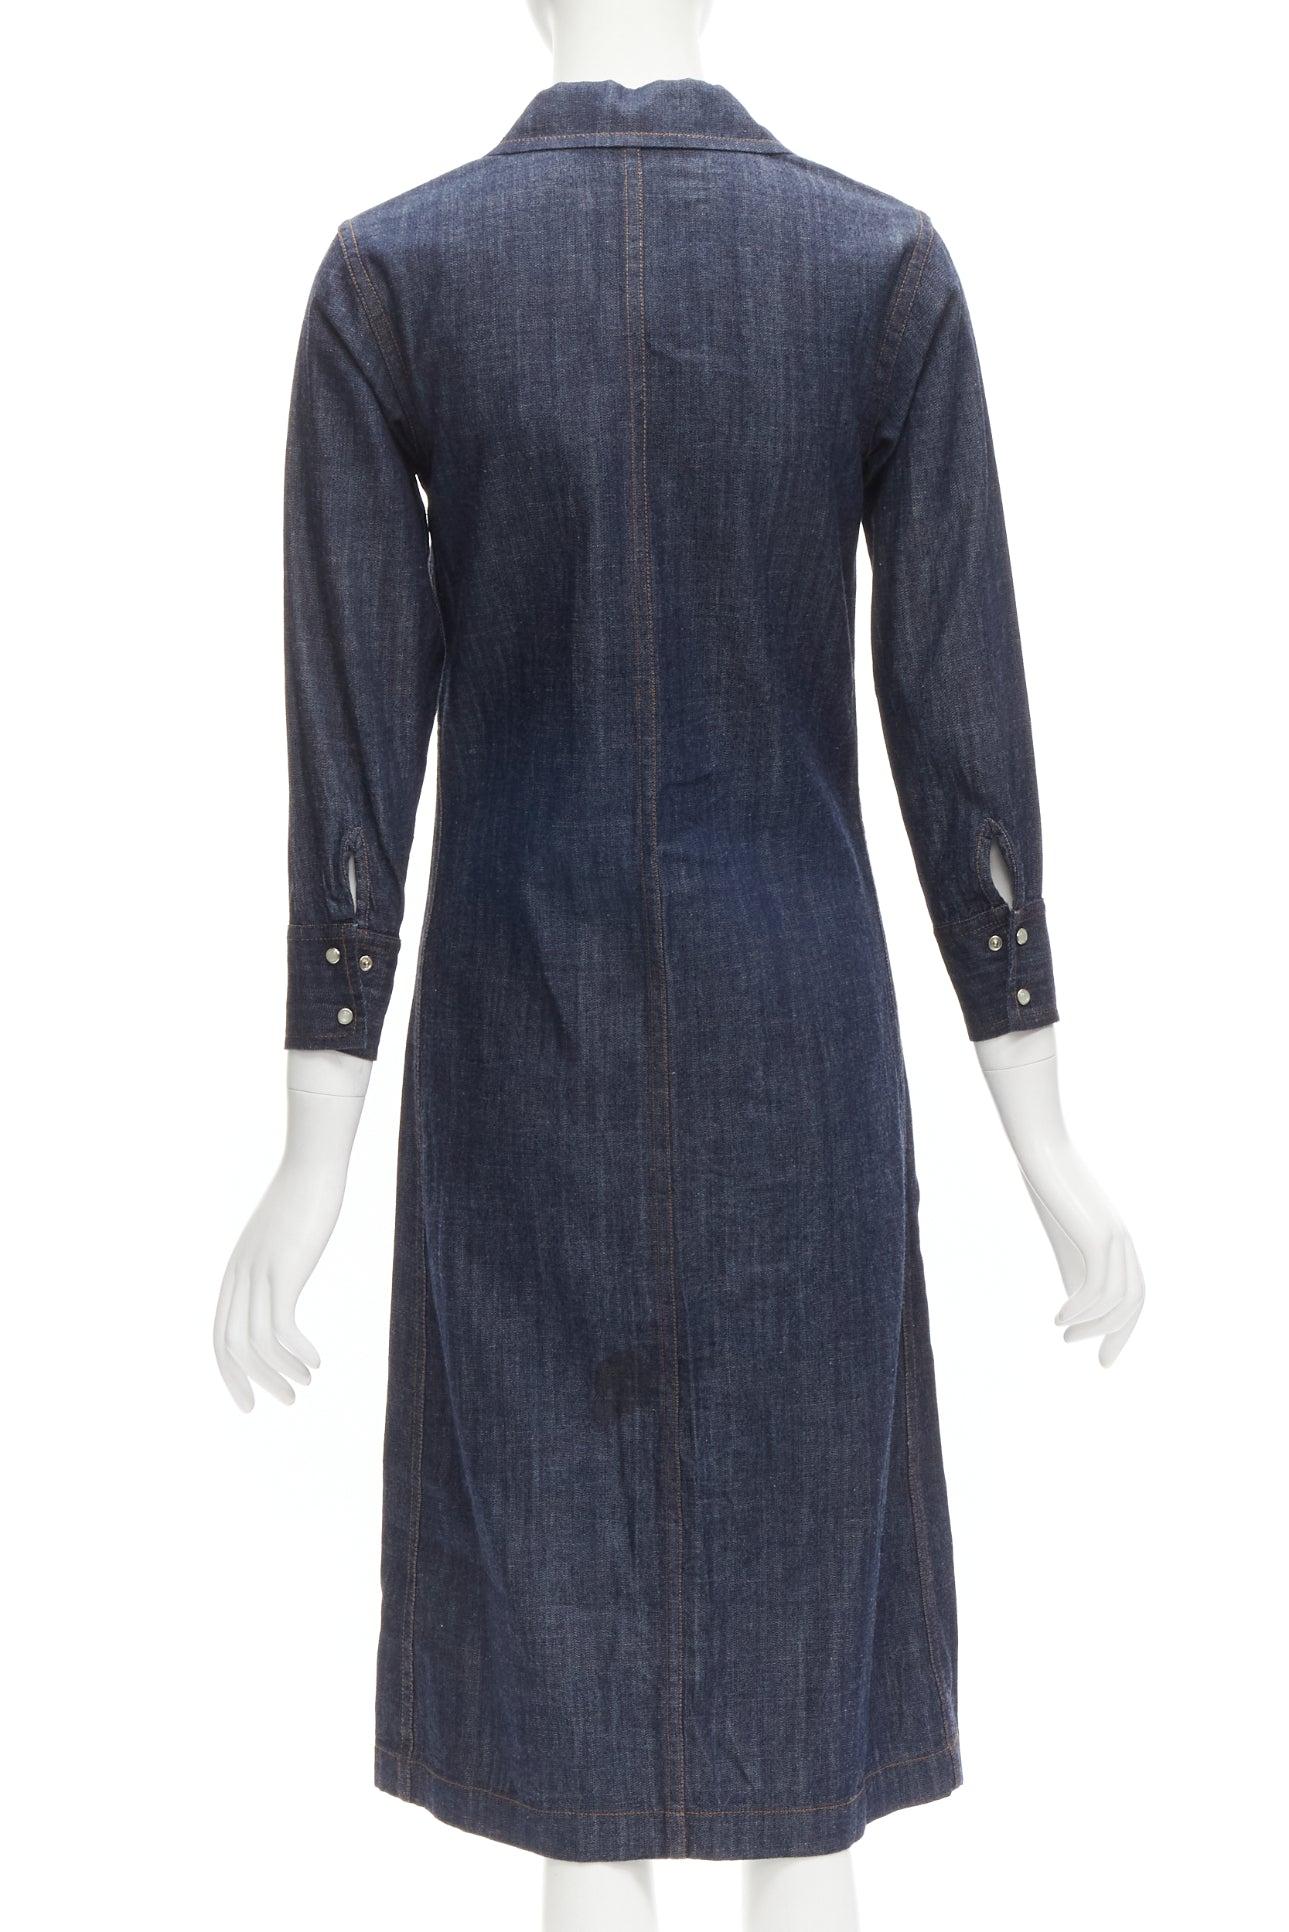 Women's CHLOE indigo blue denim button front topstitched 3/4 sleeve dress IT36 XXS